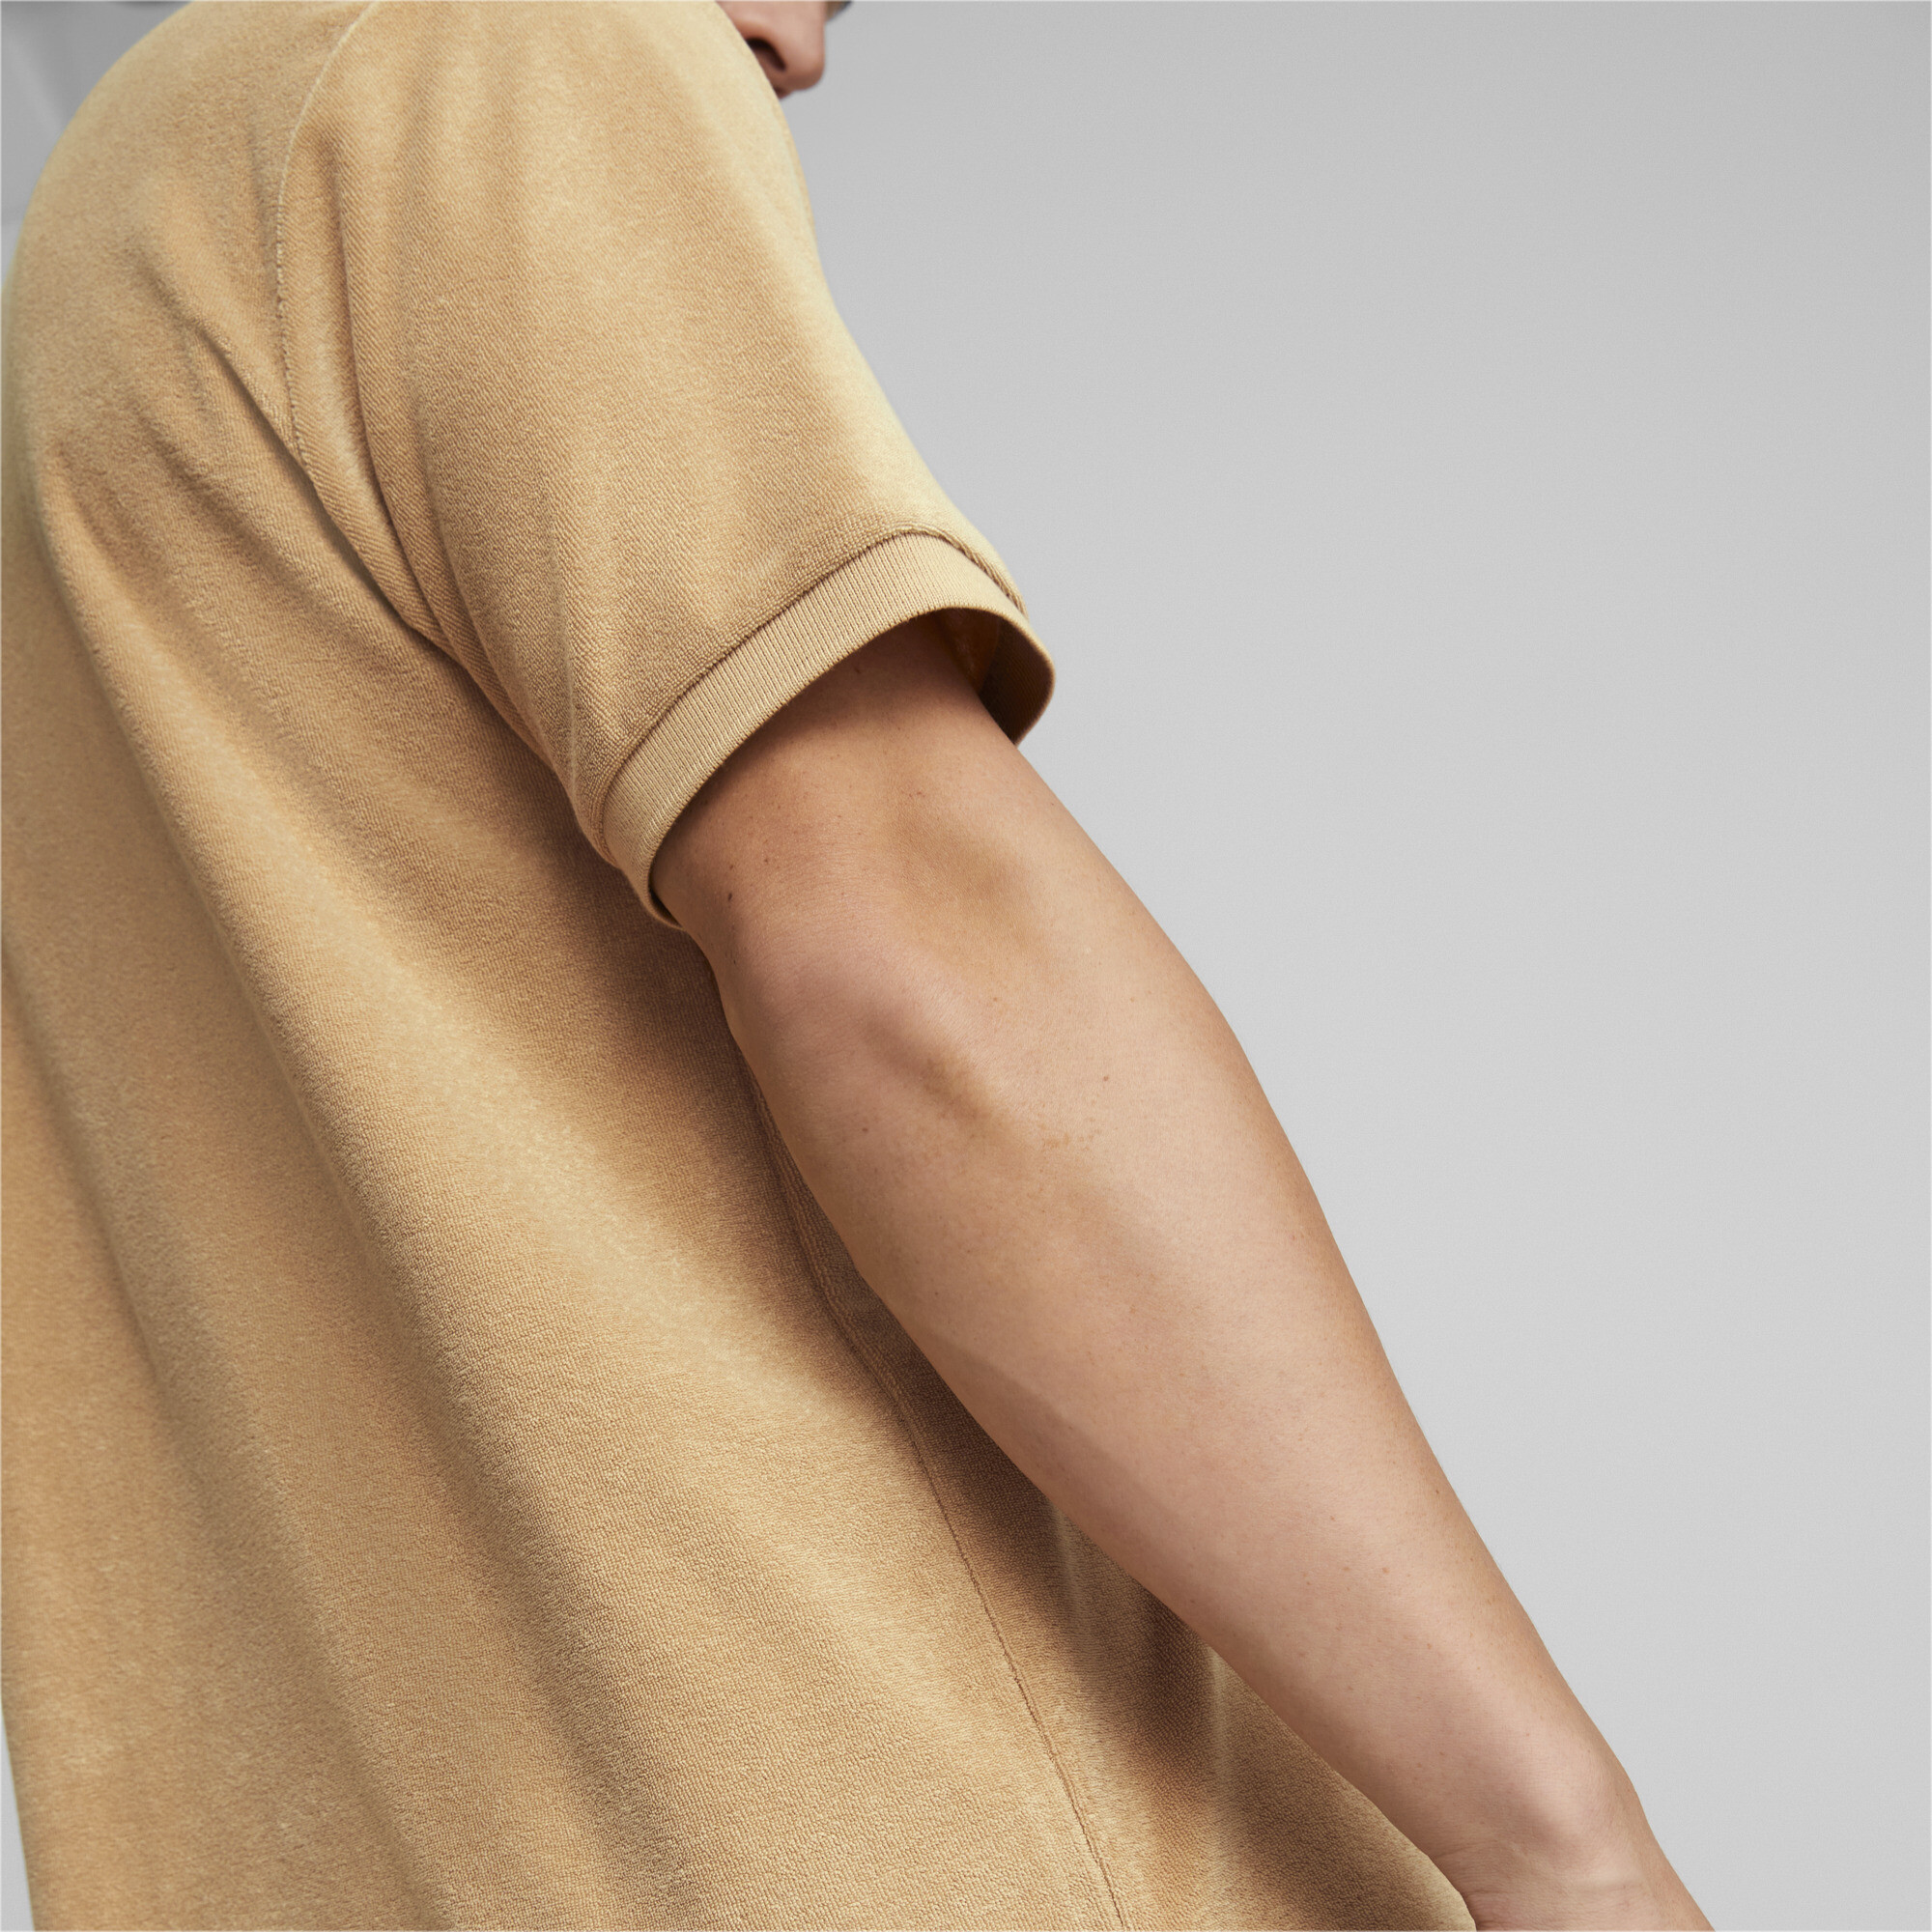 Men's Puma Classics Towelling Polo Shirt T-Shirt, Beige T-Shirt, Size XS T-Shirt, Clothing